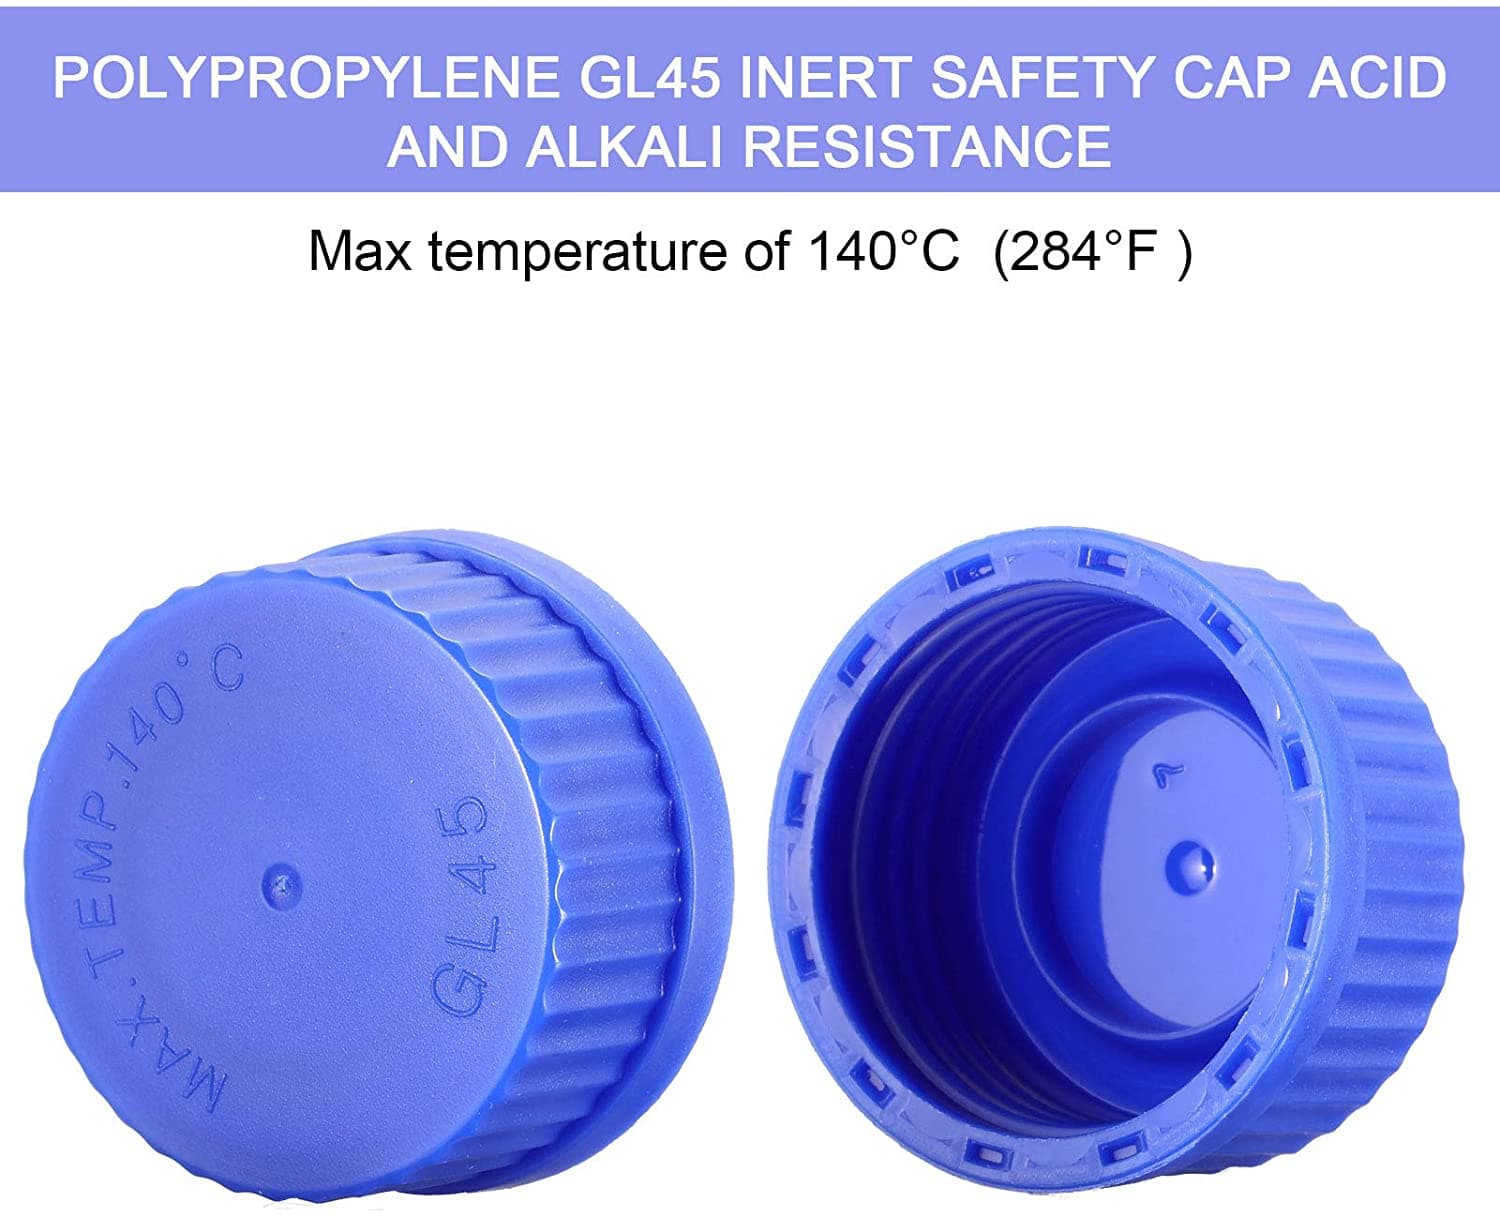 poplypropylene gl45 caps for gl45 reagent bottle